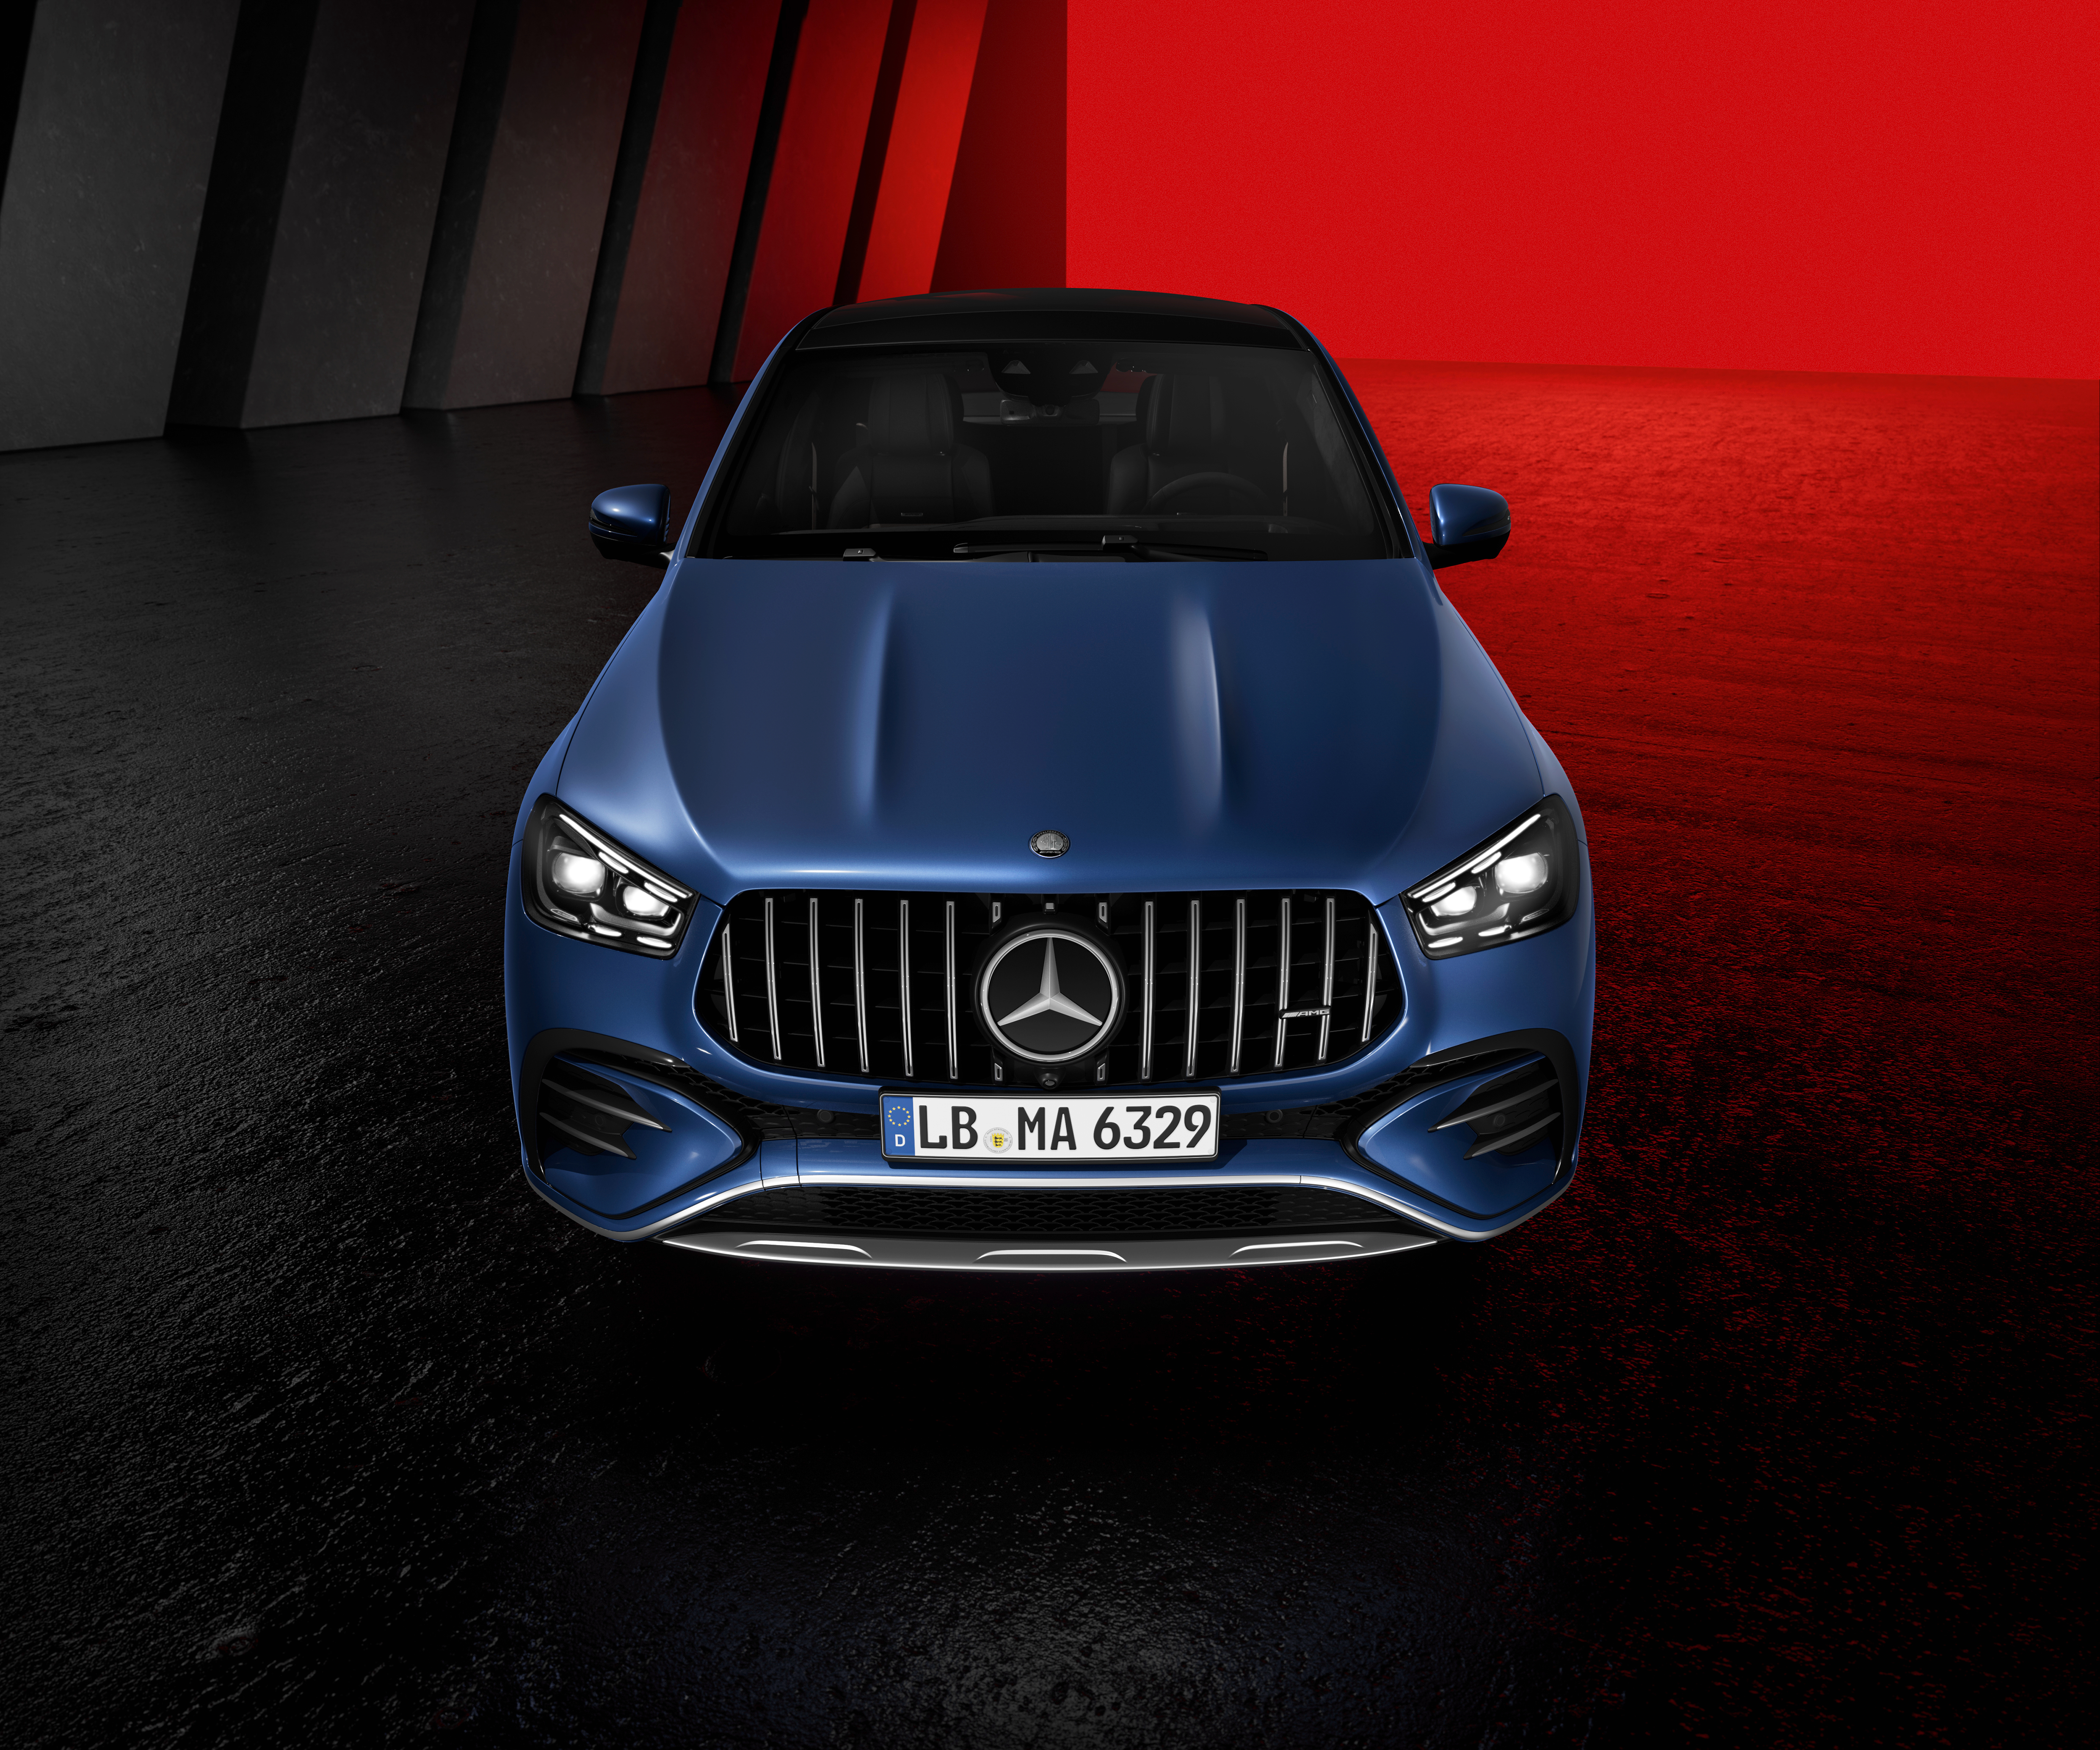 Mercedes-AMG GLE 53 in a dynamic HD desktop wallpaper setting.